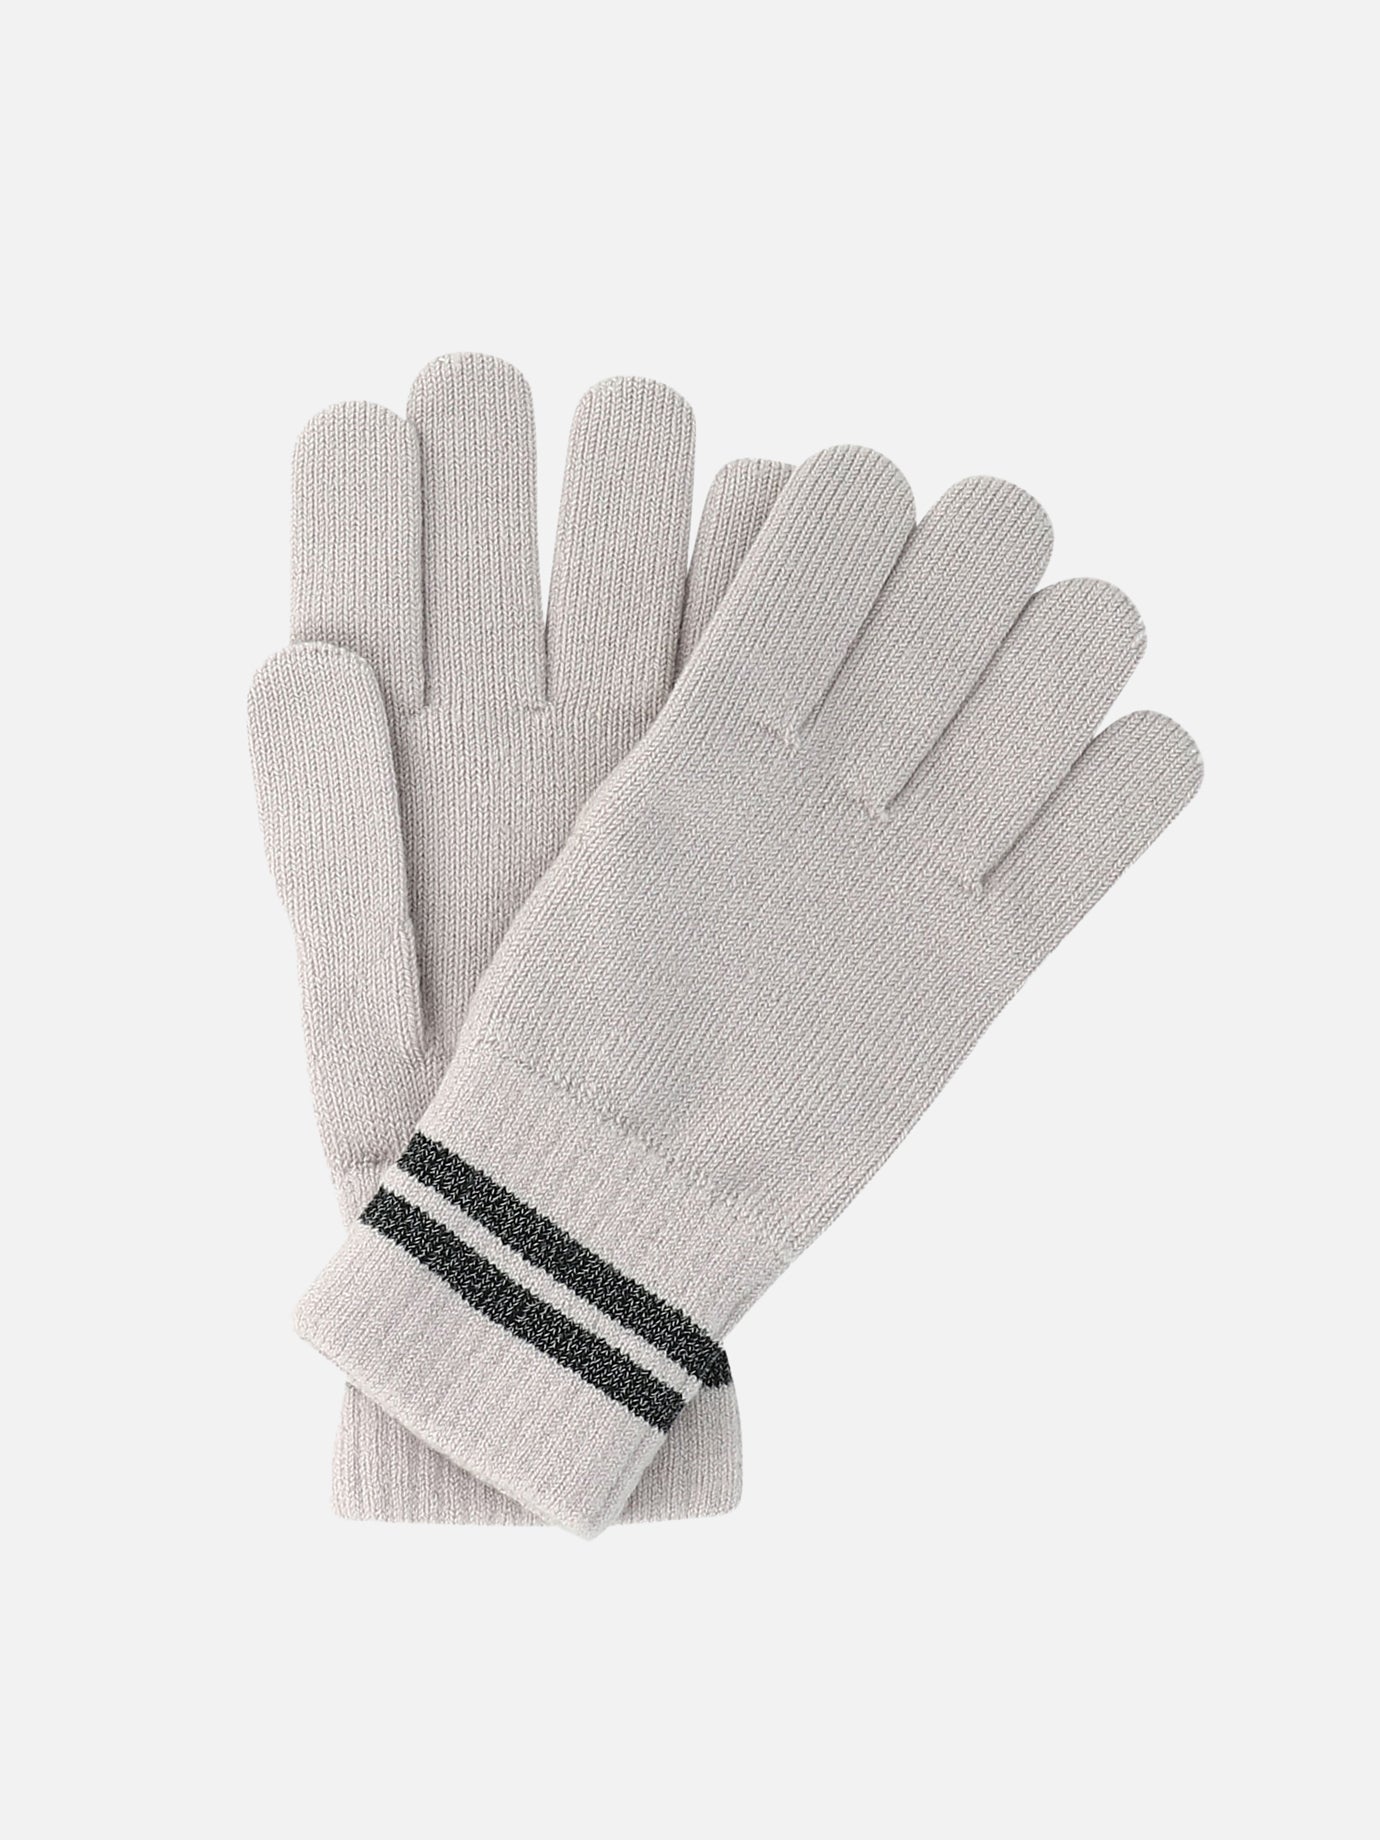 "Barrier" gloves